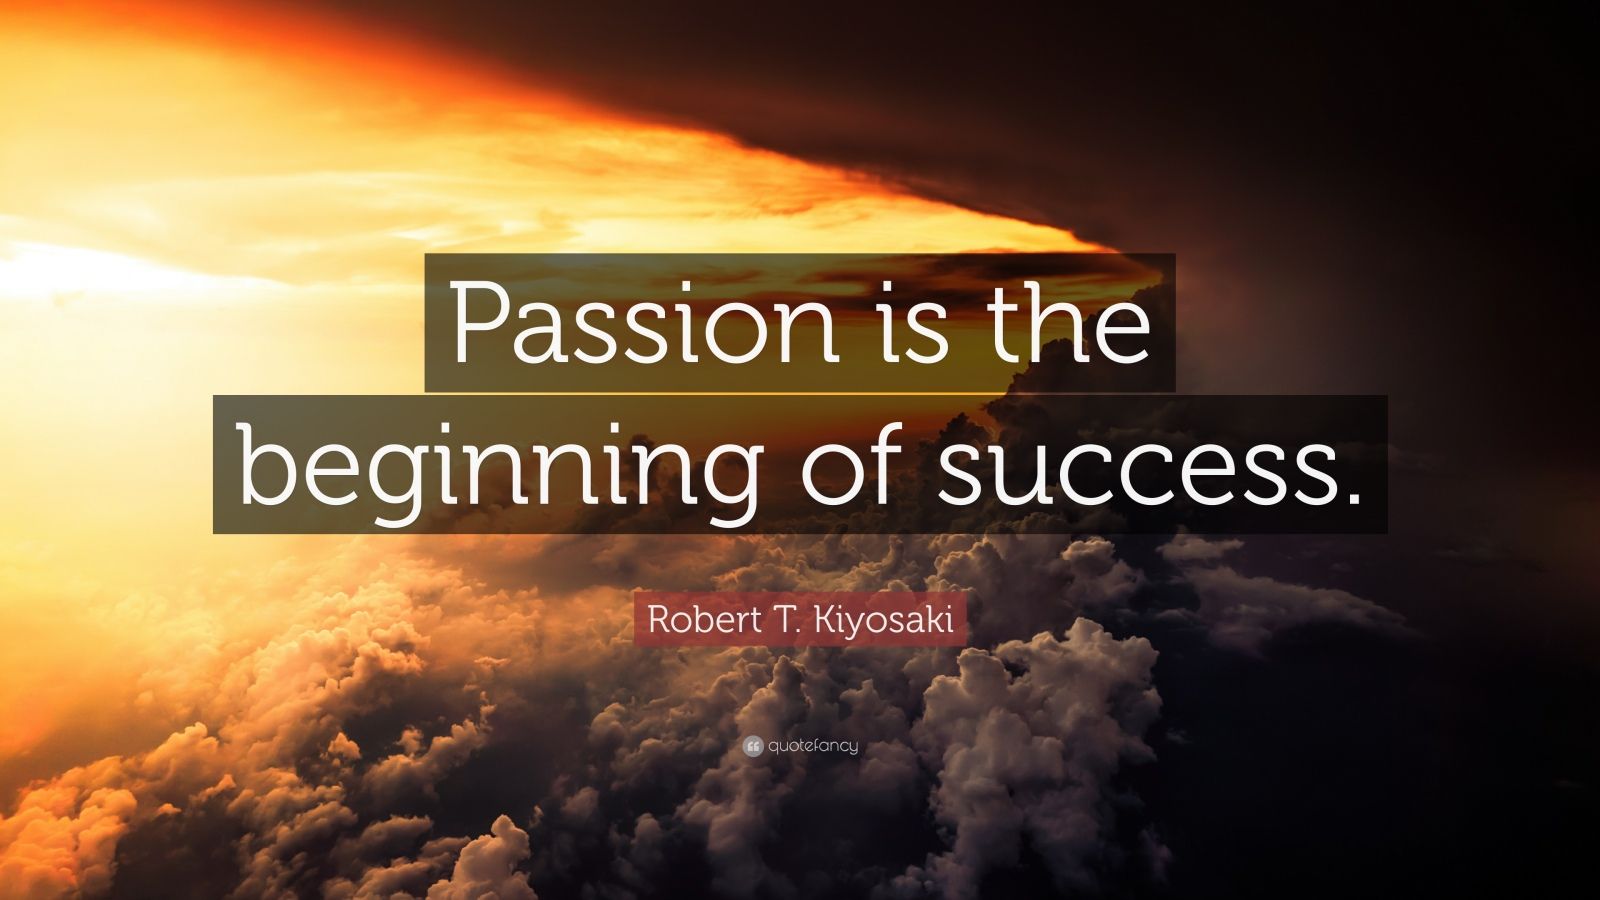 Robert T Kiyosaki Quote “passion Is The Beginning Of Success” 12